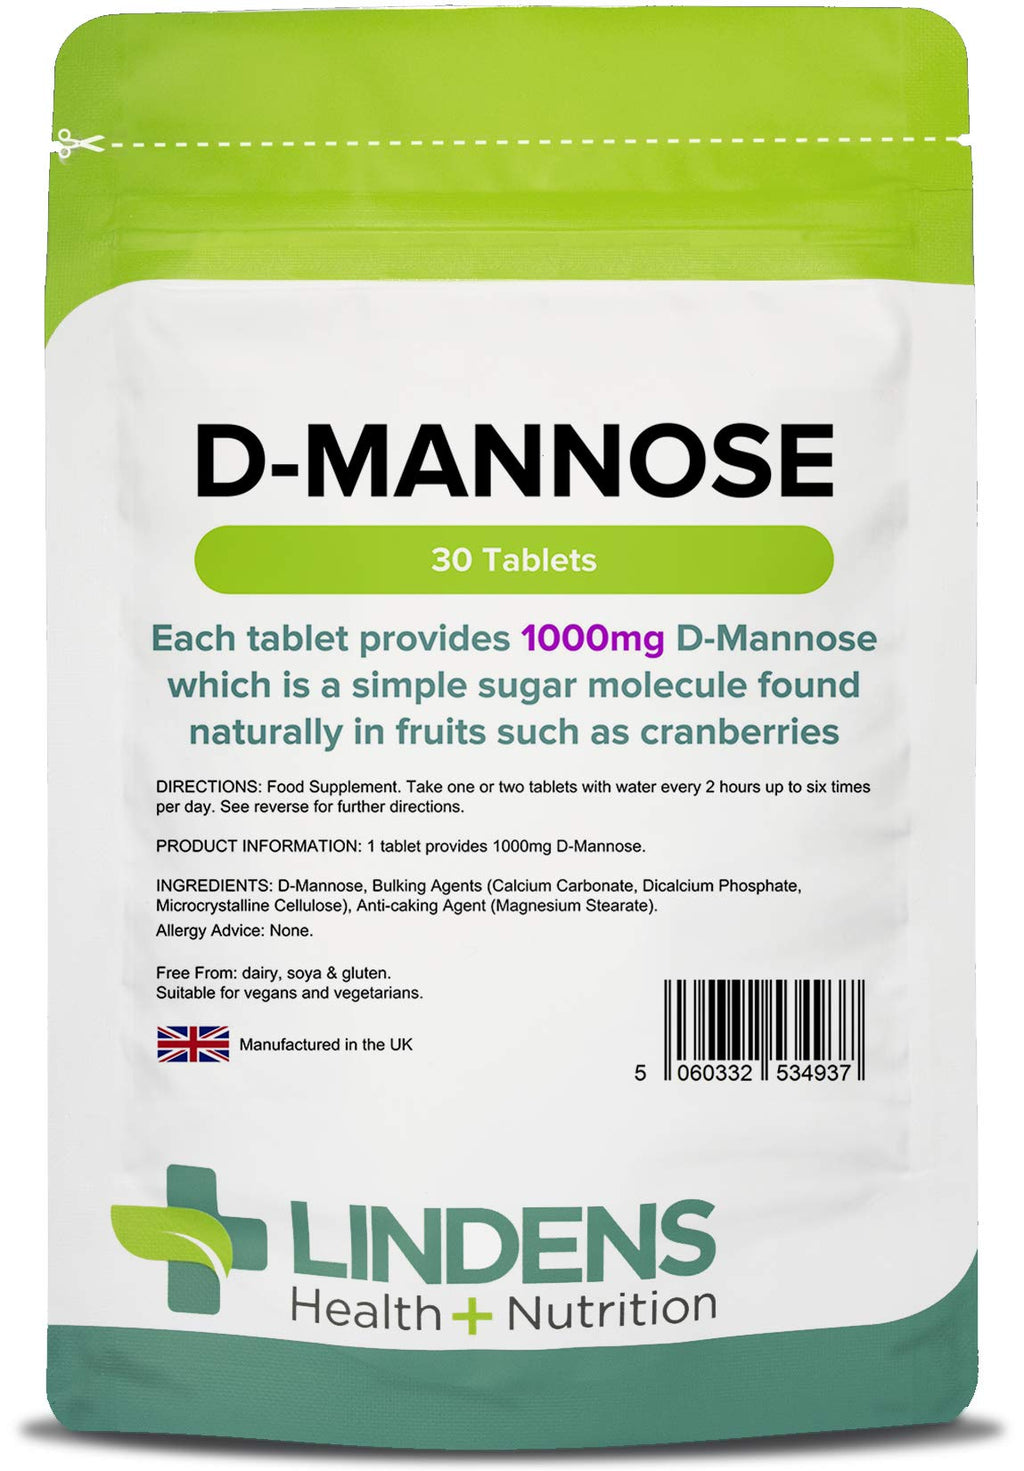 [Australia] - Lindens D-Mannose 1000mg Tablets - 30 Pack - Each Tablet Provides 1000mg D Mannose - UK Manufacturer, Letterbox Friendly 